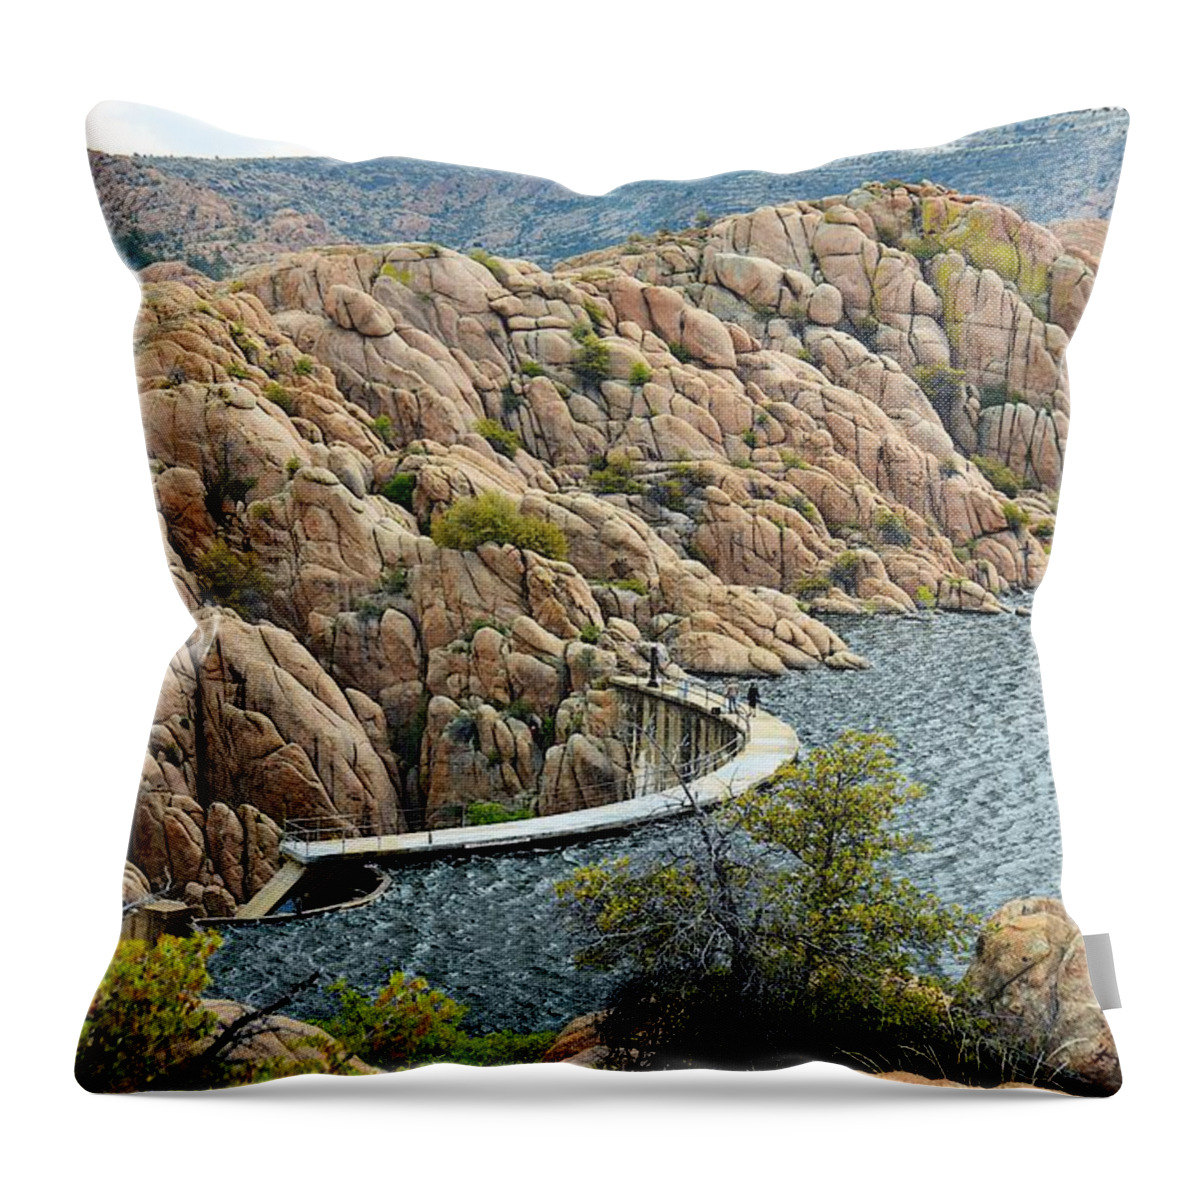 Photograph Throw Pillow featuring the photograph Watson Lake Dam by Richard Gehlbach